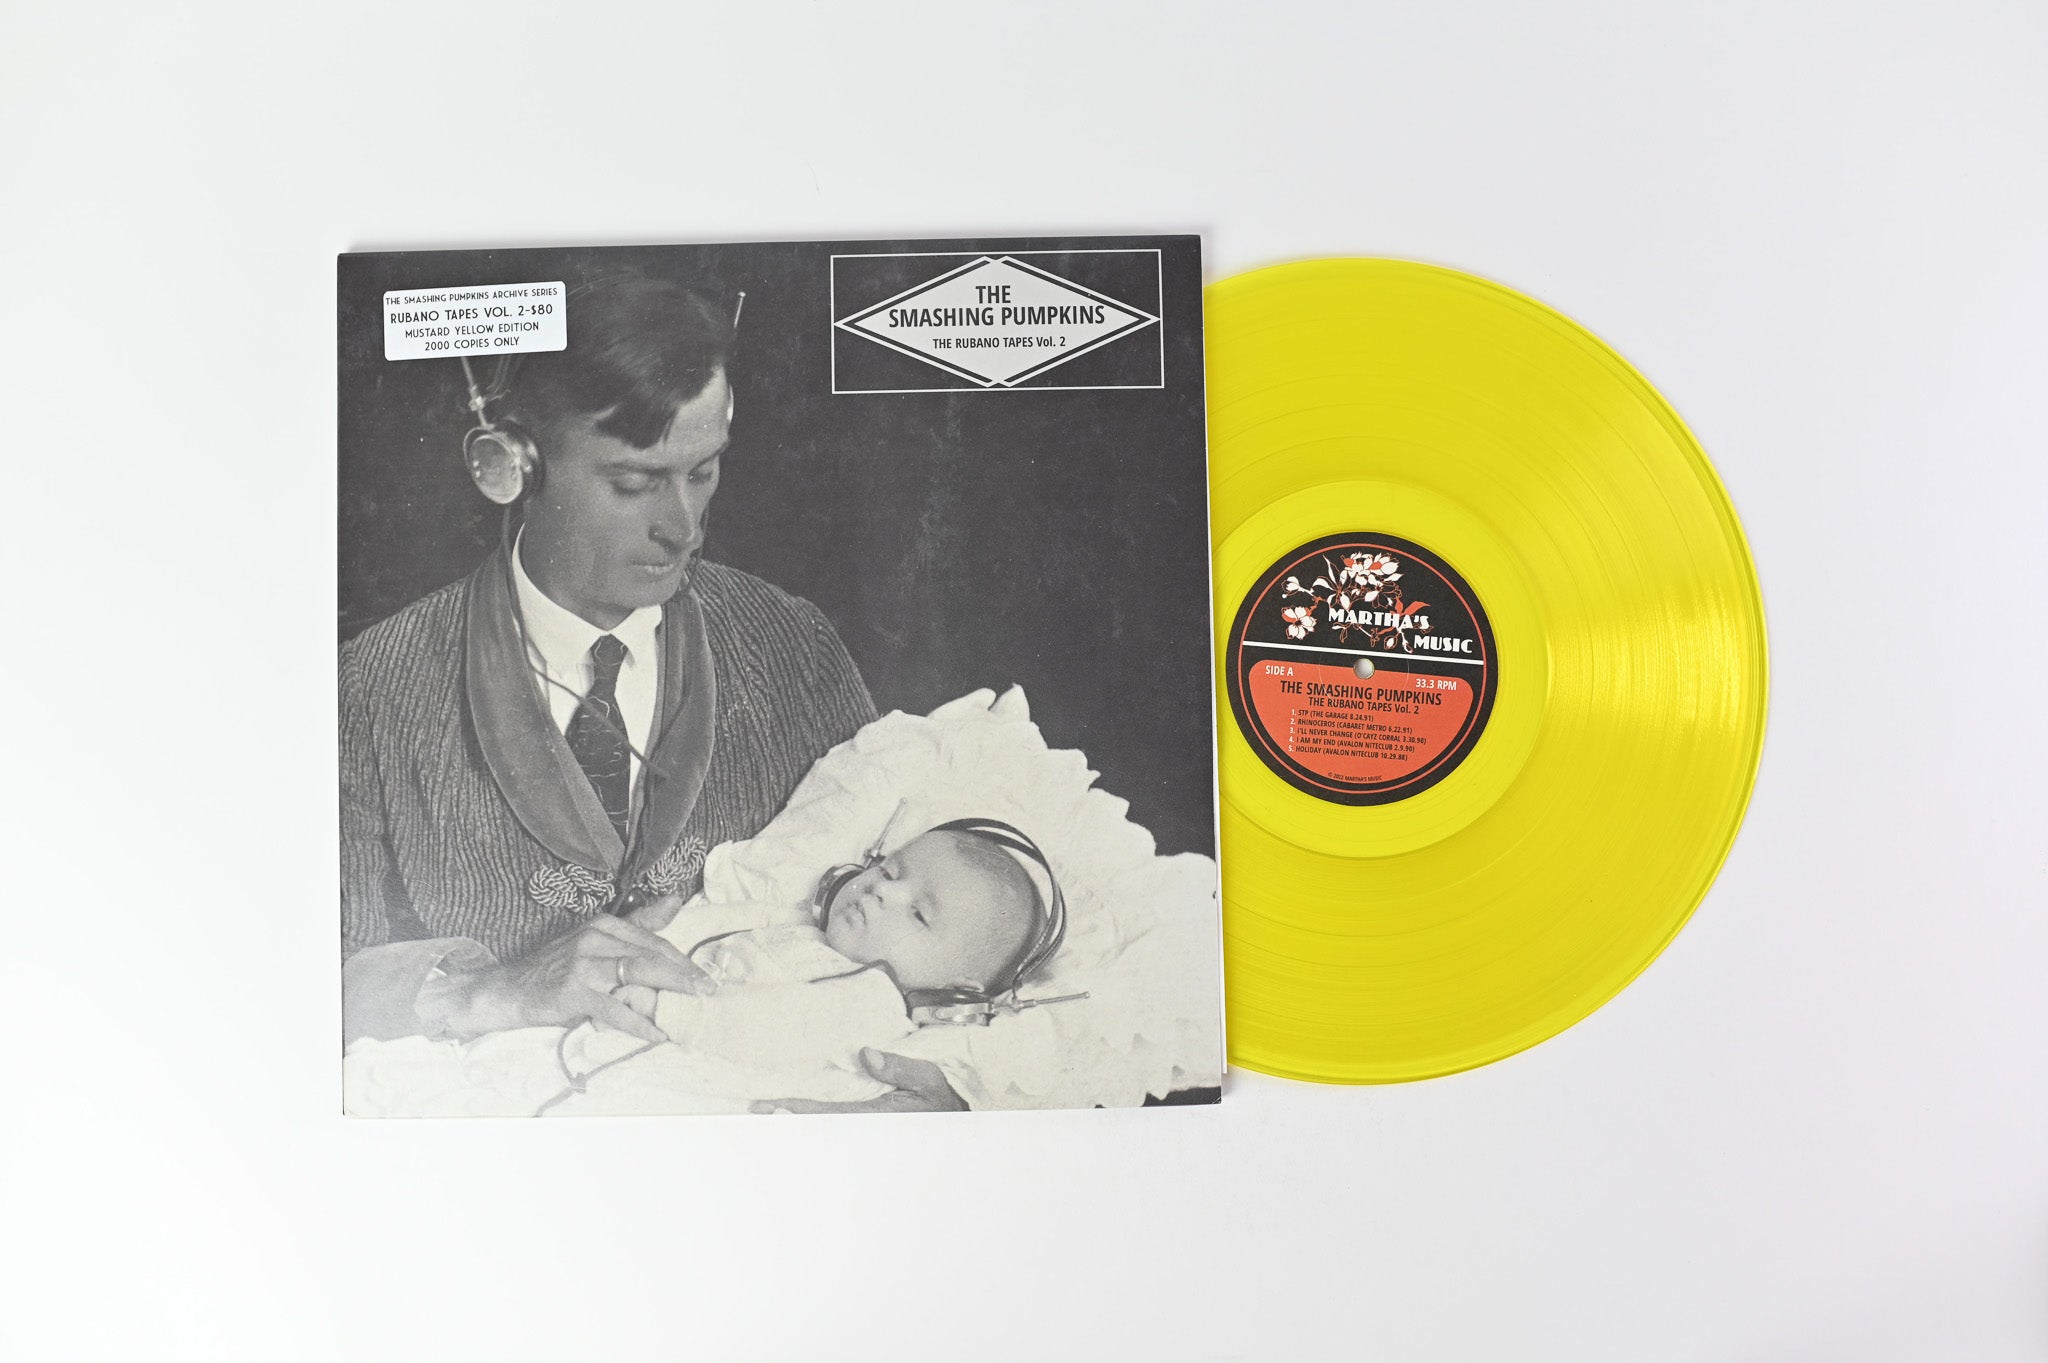 The Smashing Pumpkins - The Rubano Tapes Vol. 2 on Martha's Music Ltd Yellow Mustard Vinyl